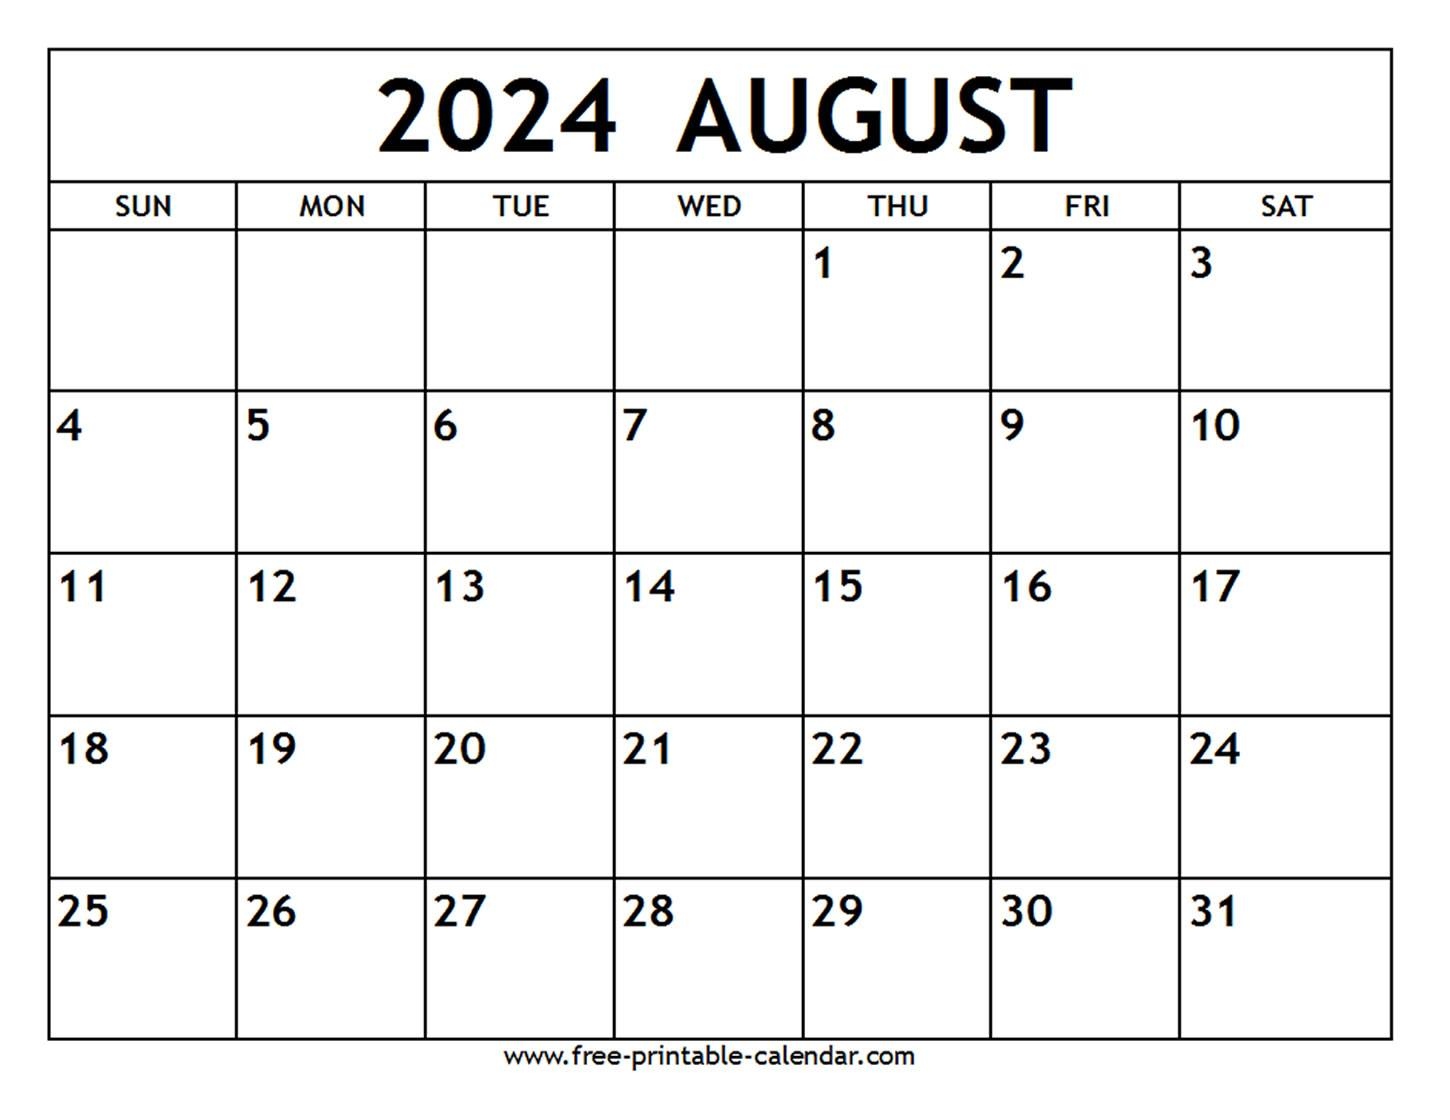 August 2024 Calendar - Free-Printable-Calendar inside Free Printable August 2024 Calendar With Lines